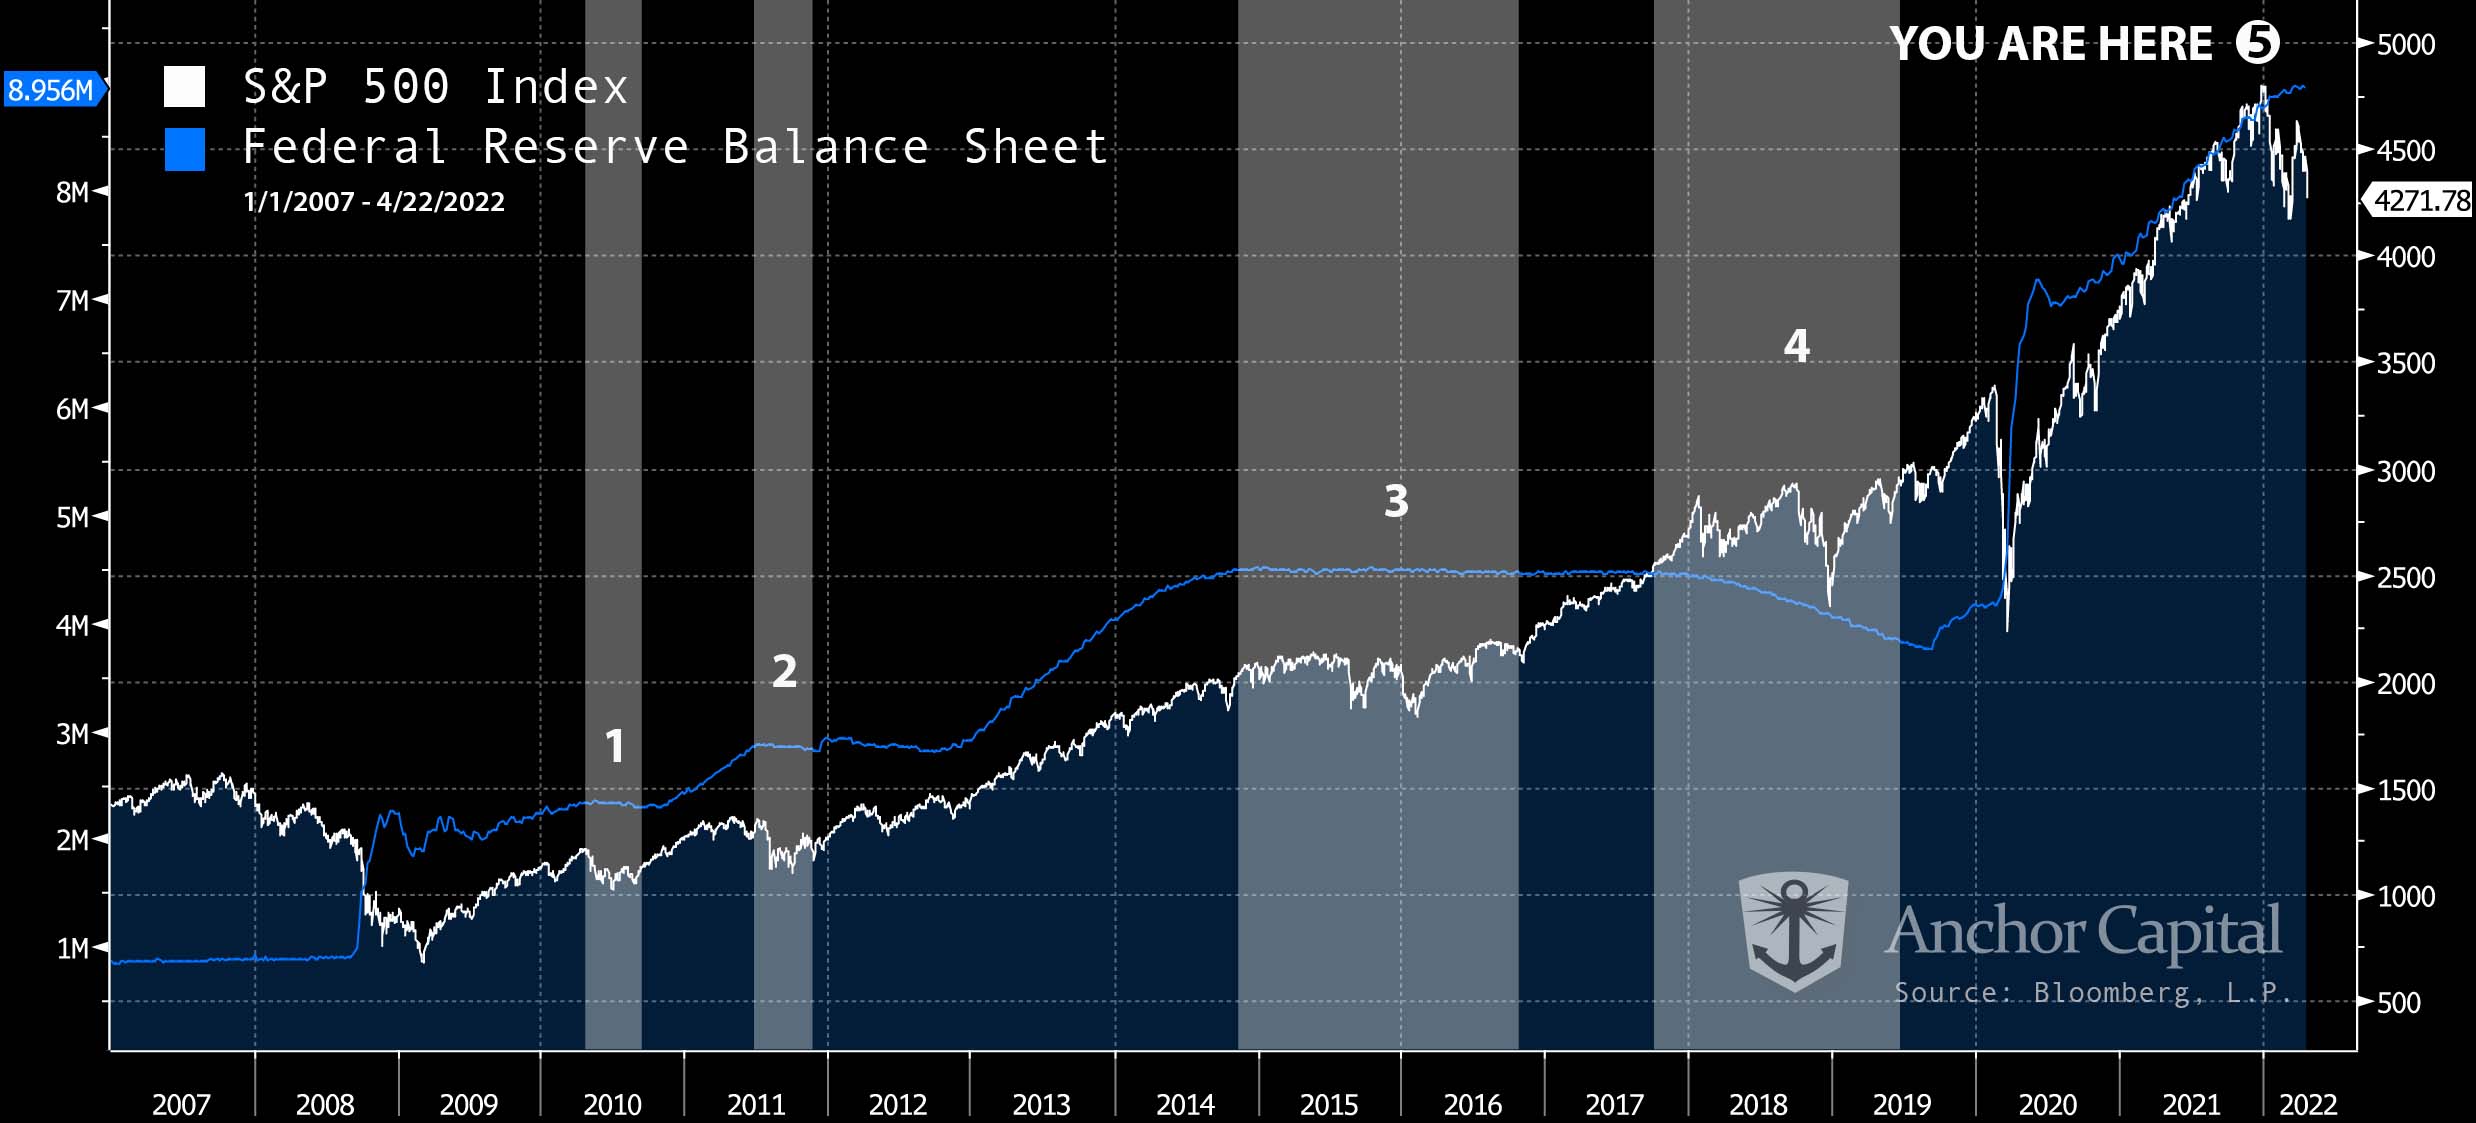 S&P 500 Index vs Federal Reserve Balance Sheet